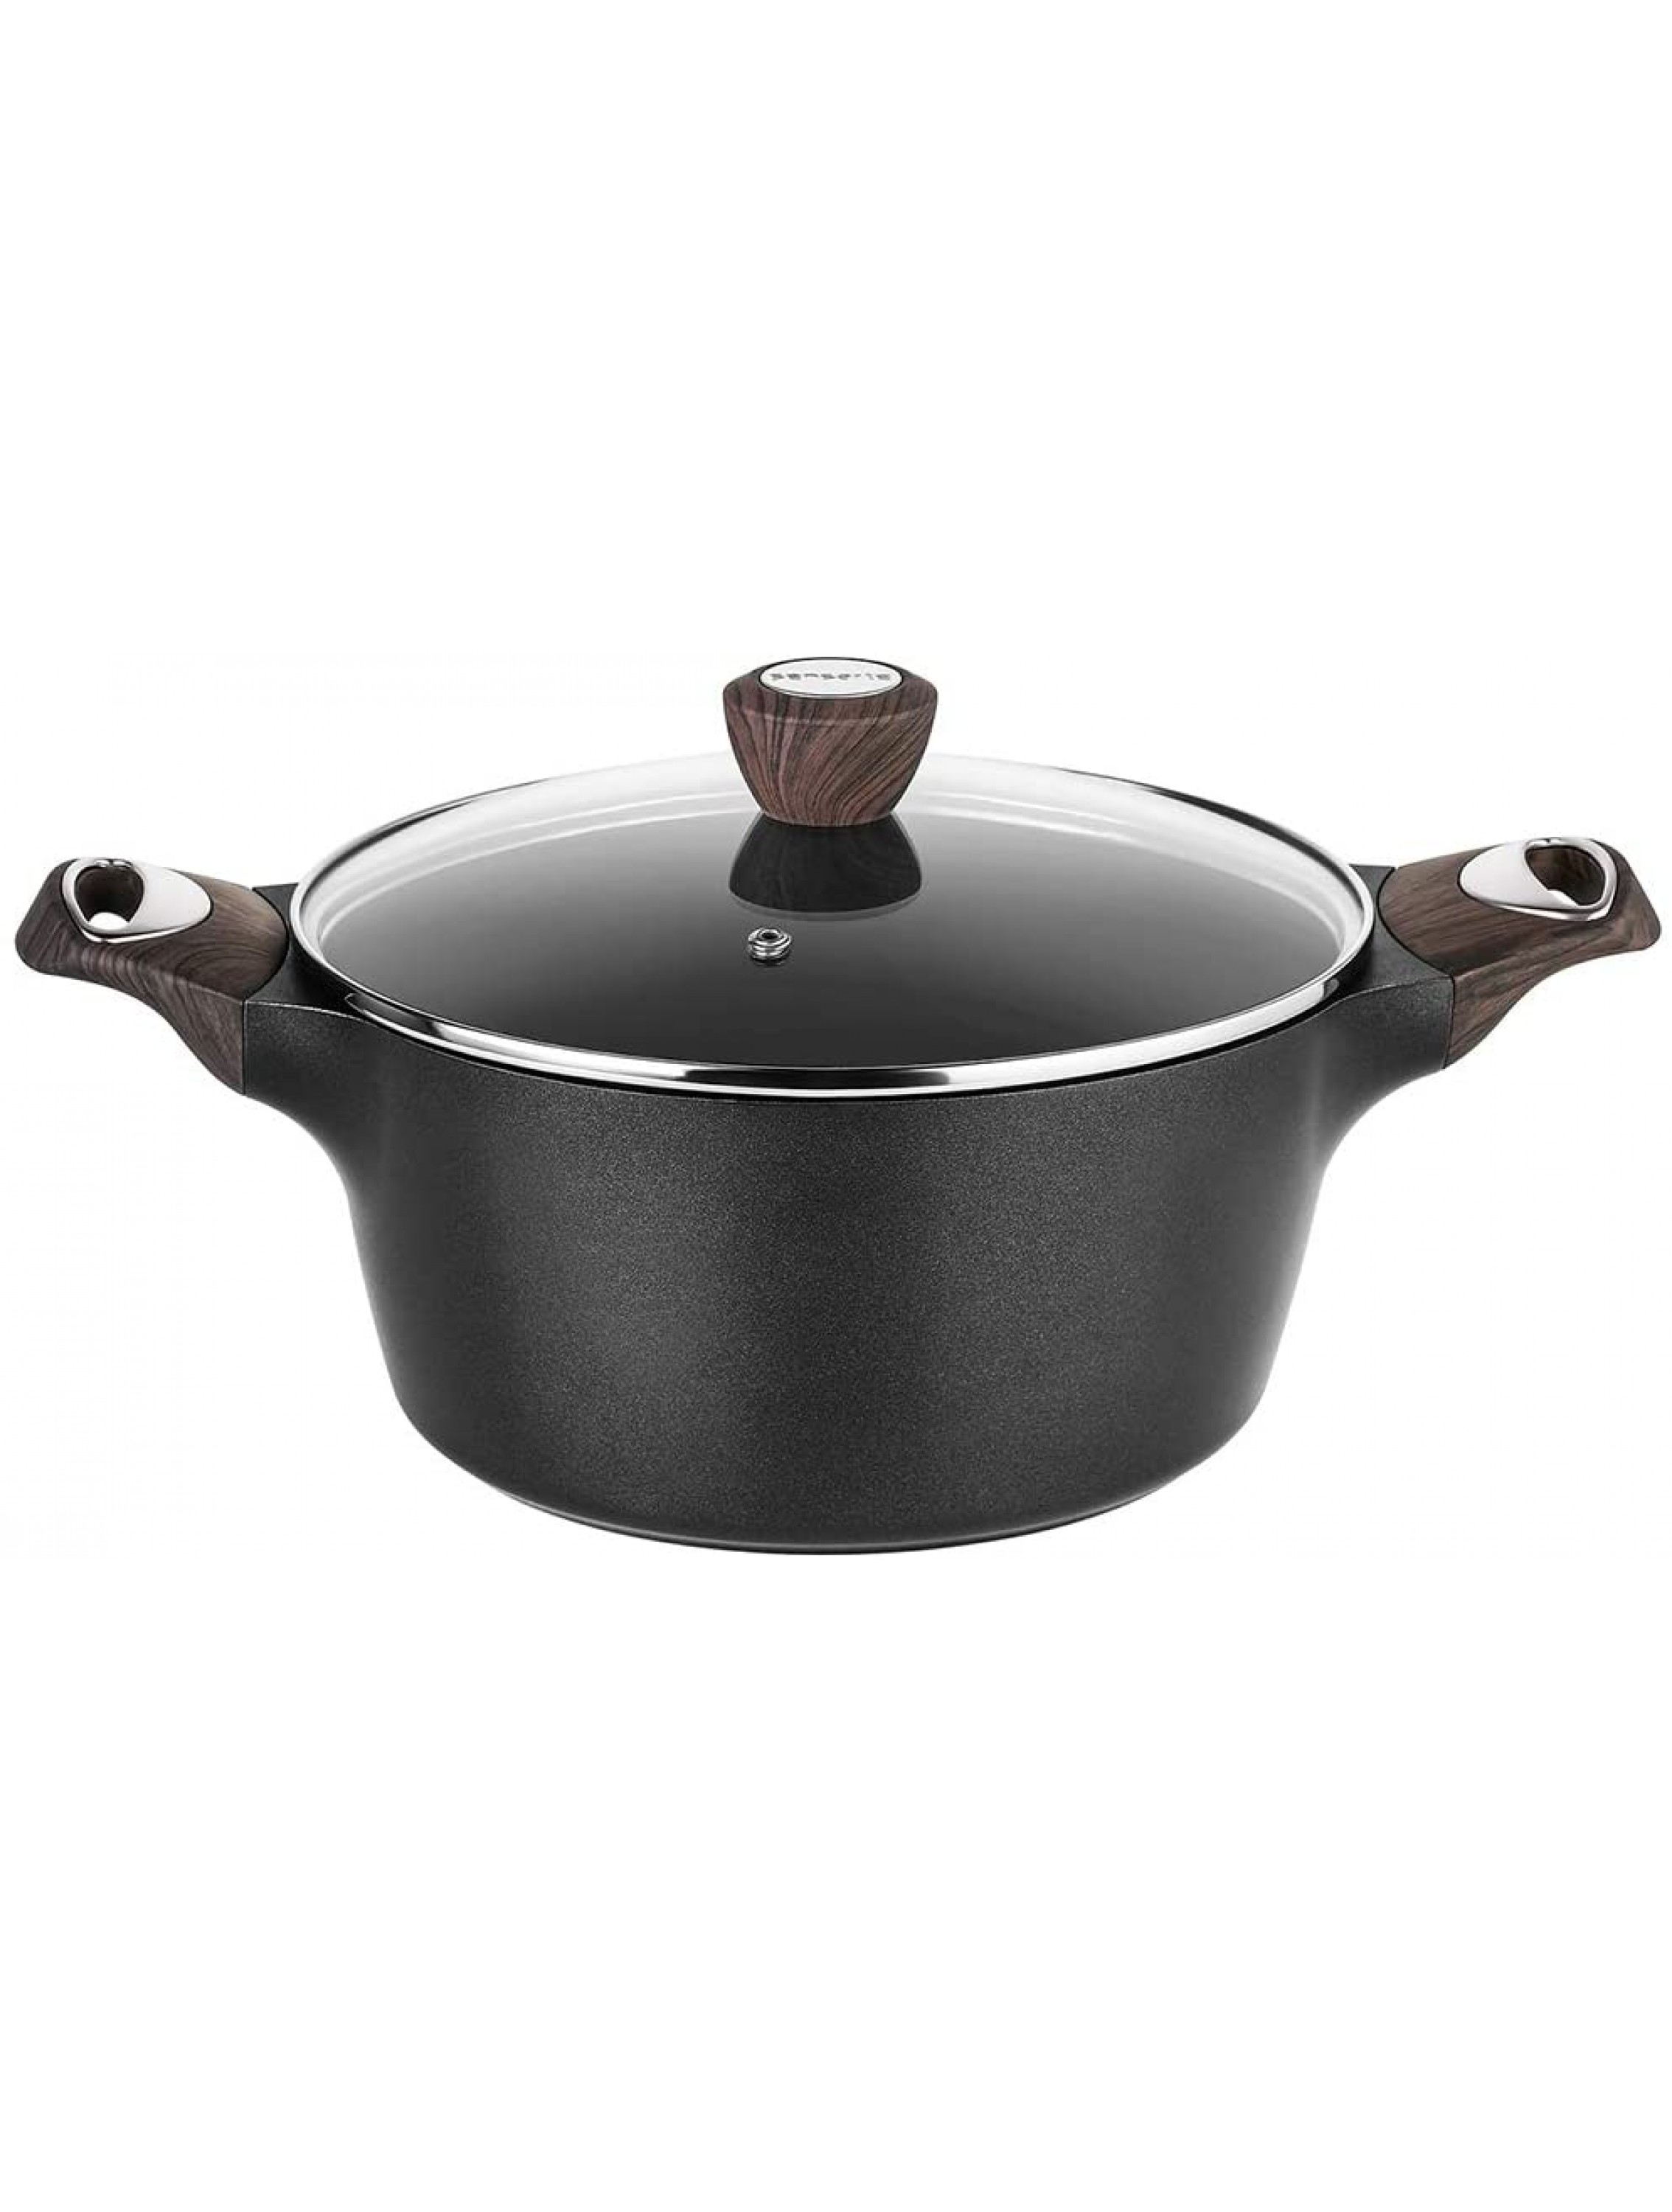 SENSARTE Stock Pot Nonstick 4.5 Quart Soup Pot Casserole Pot with Lid Healthy Pasta Pot Cooking Pot Black Sauce Pot with Woodgrain Bakelite Handle All Stove Compatible Cookware Easy to Clean - BCQFXWJAD